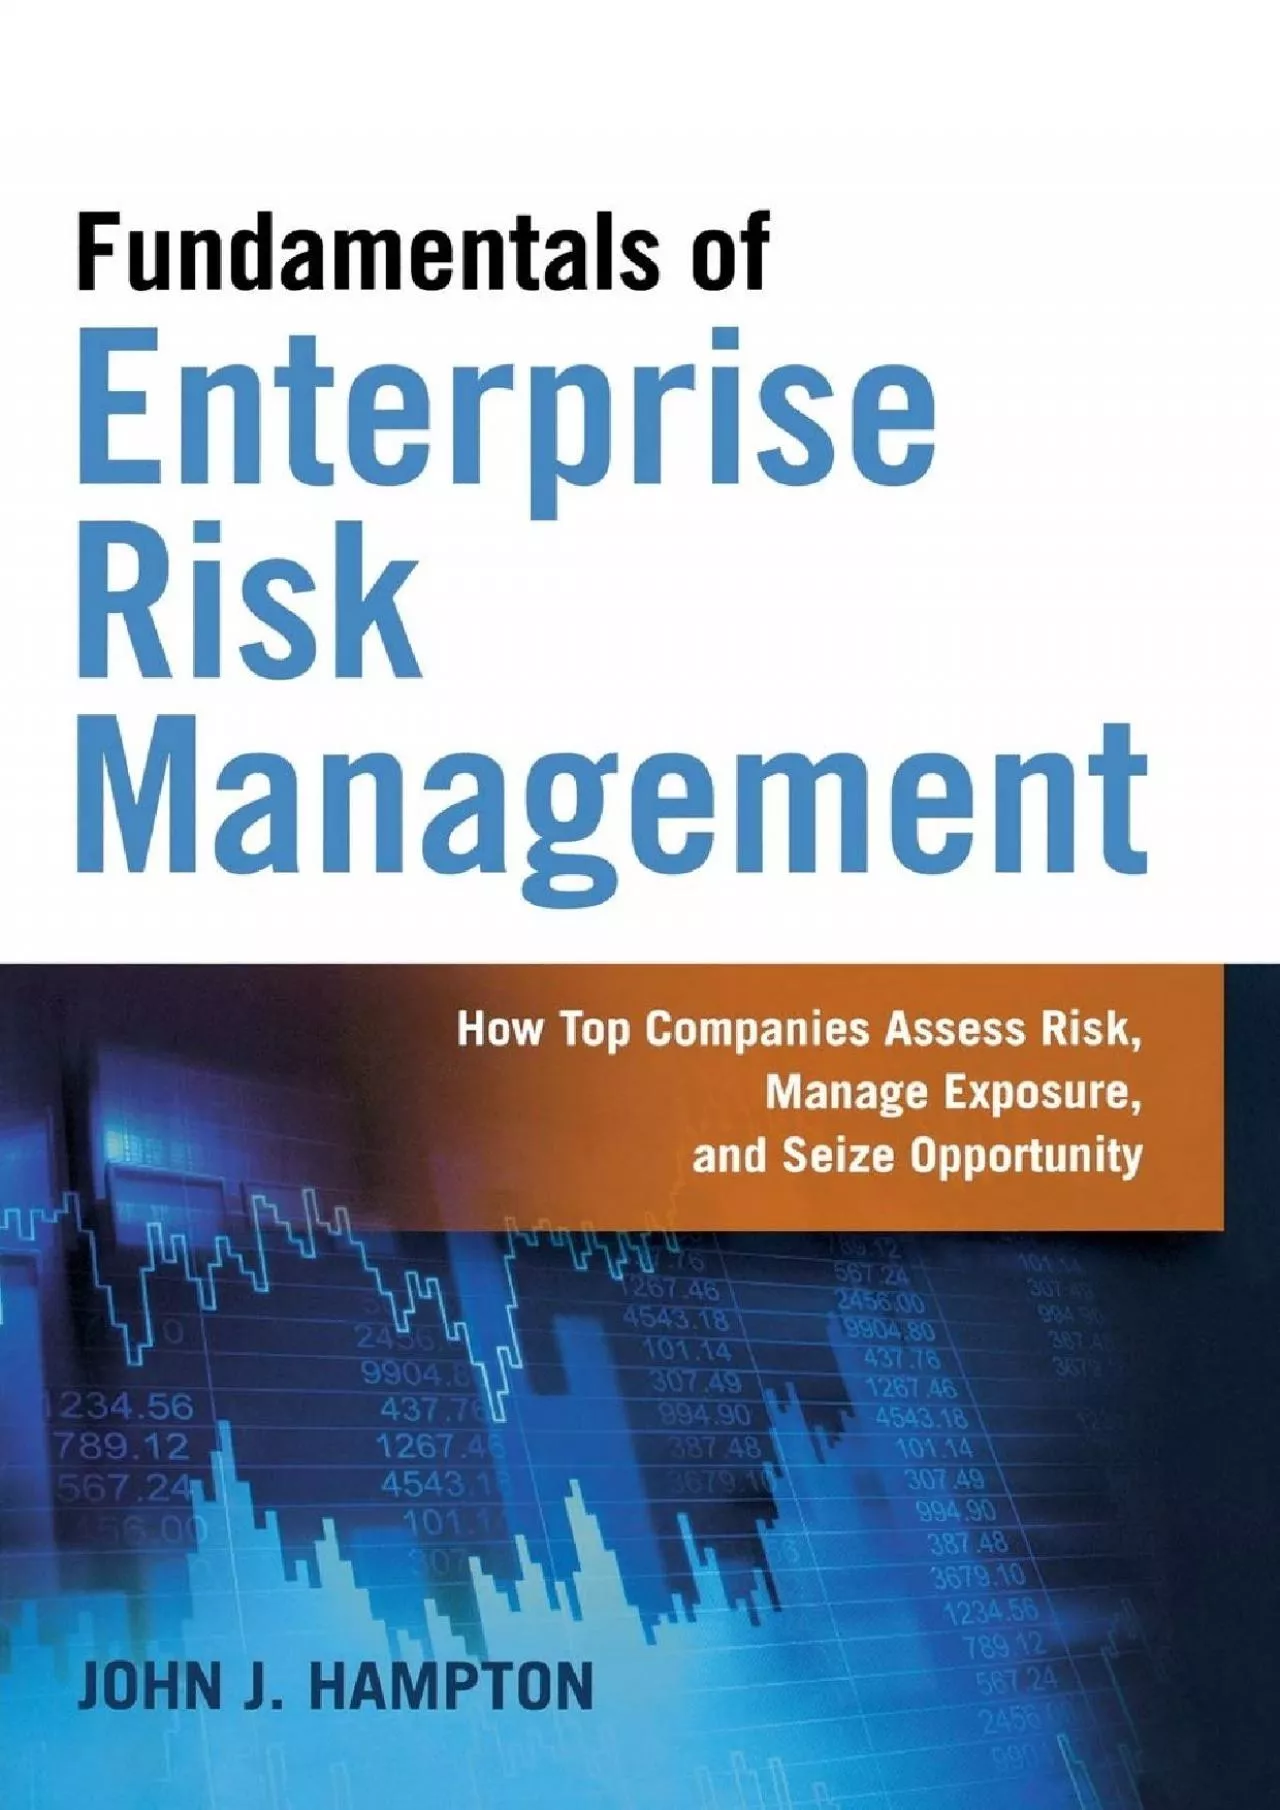 (BOOS)-Fundamentals of Enterprise Risk Management: How Top Companies Assess Risk, Manage